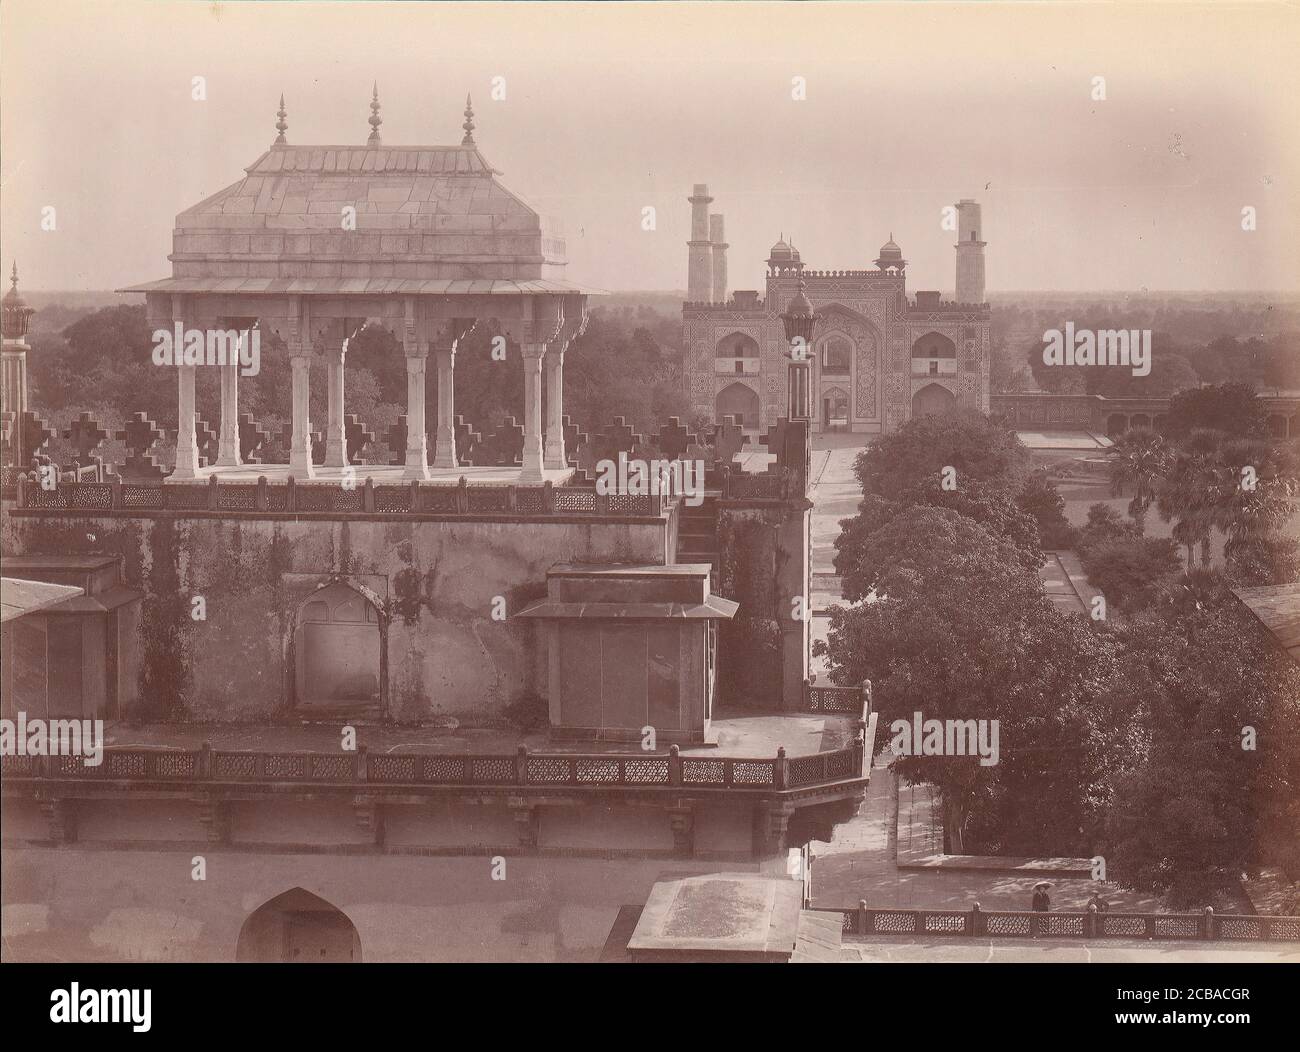 Akbar's Tomb and Gardens, Sikandra, India, 1860s-70s. Stock Photo